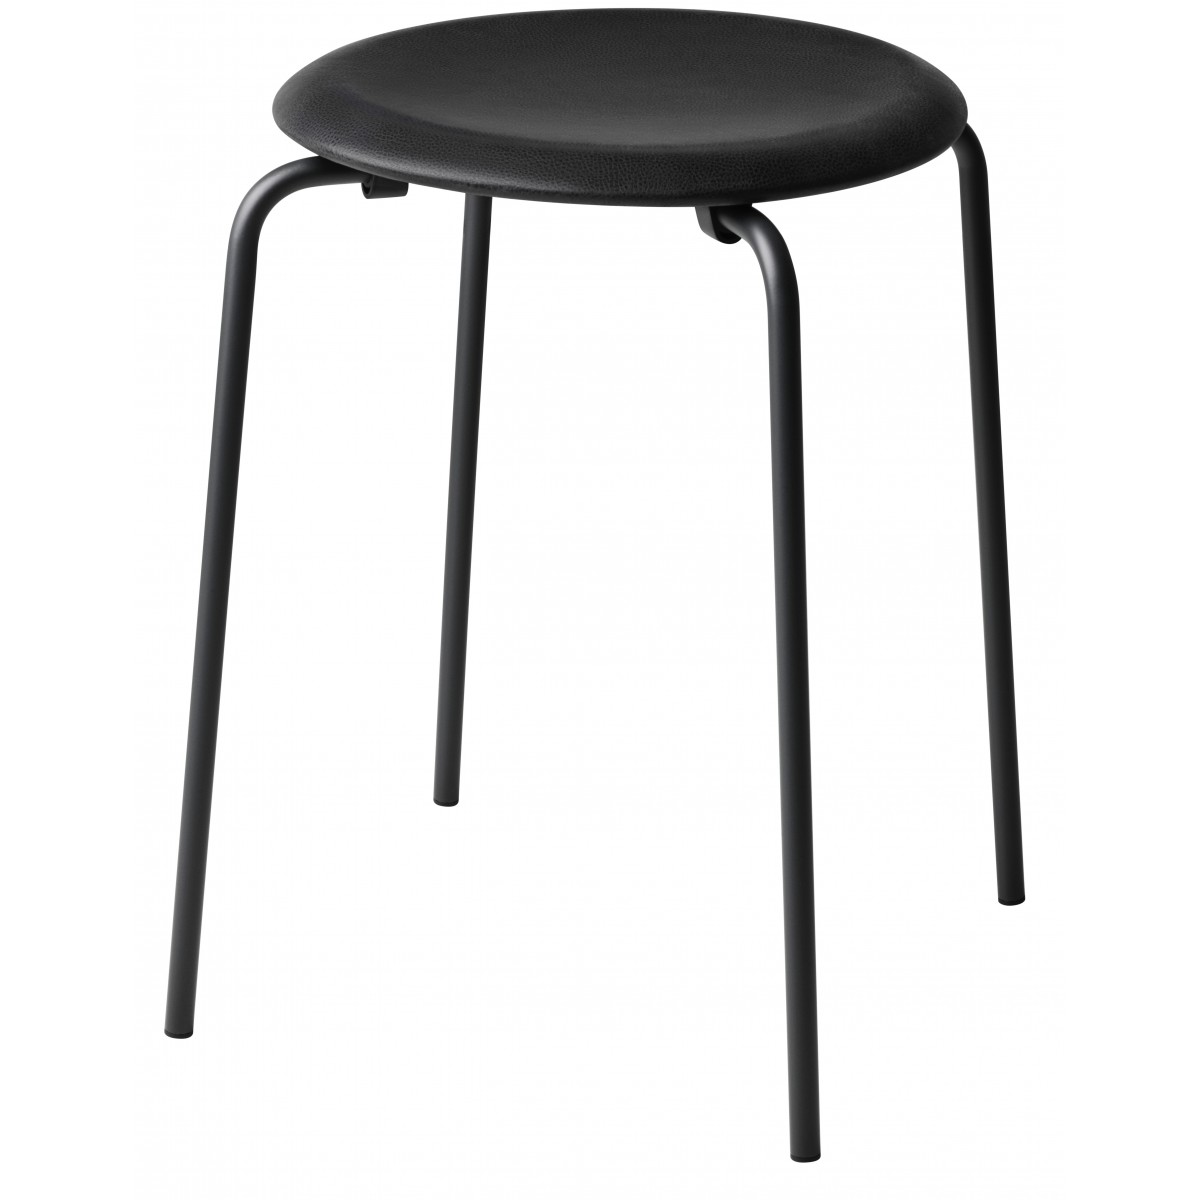 Dot stool – black Intense leather / matt black